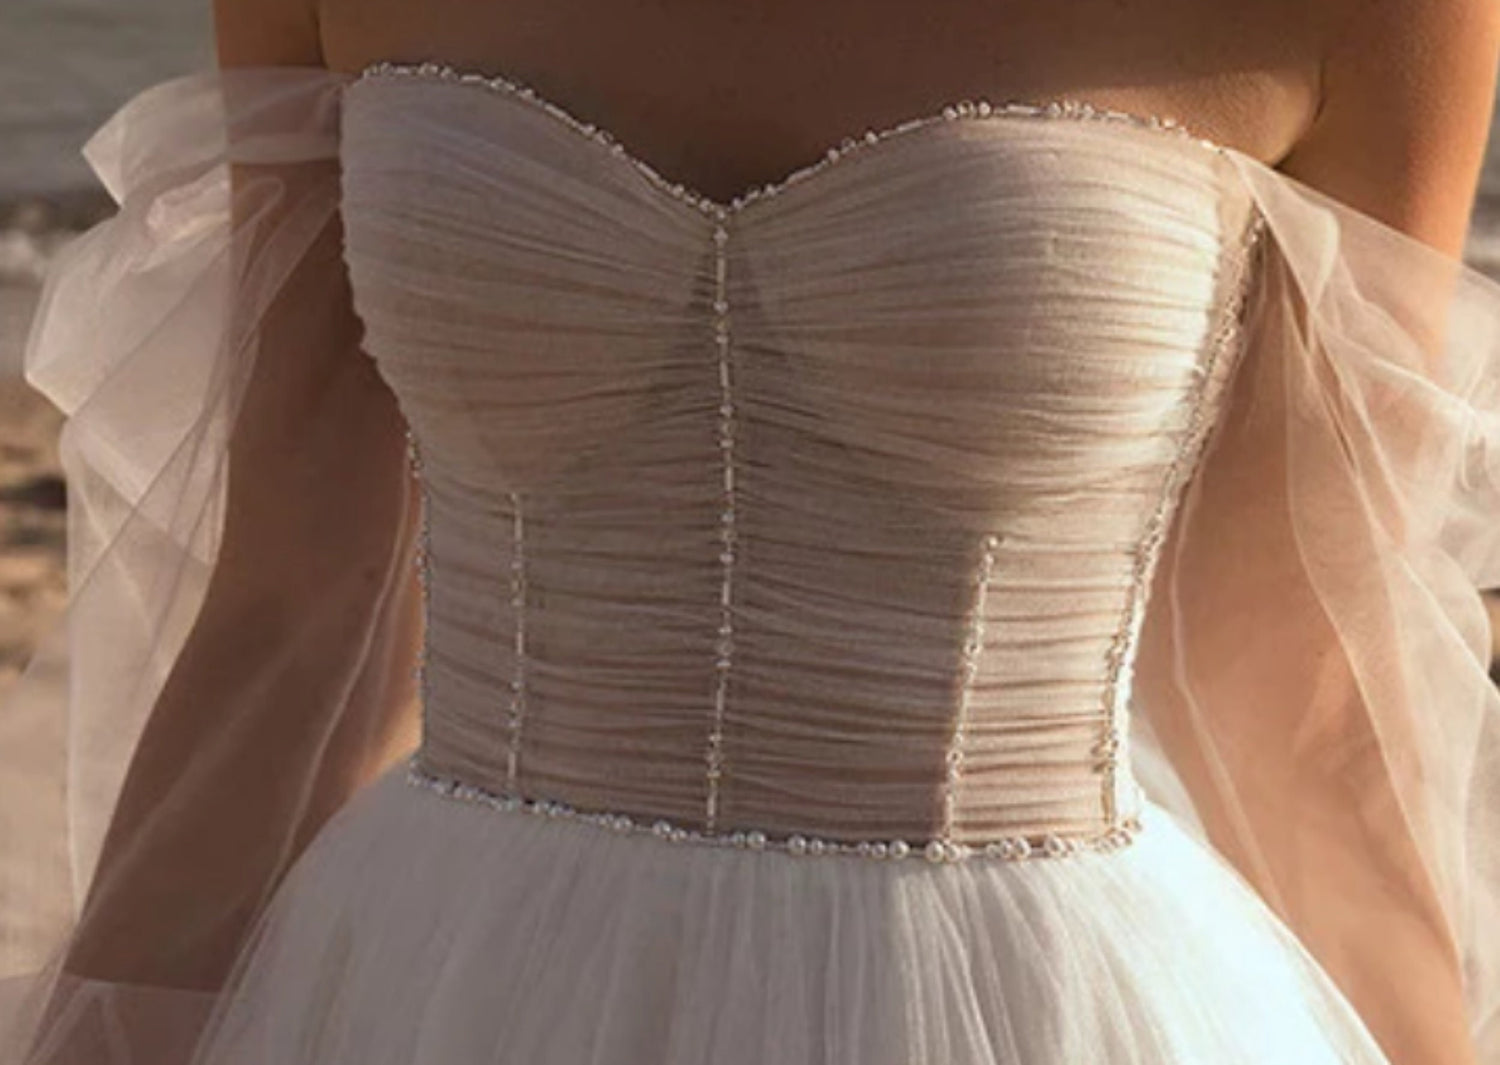 Sweetheart Beach Wedding Dress | Off Shoulder Wedding Dress with Slit Side | Vintage Boho Wedding Dress | Long Puff Sleeves